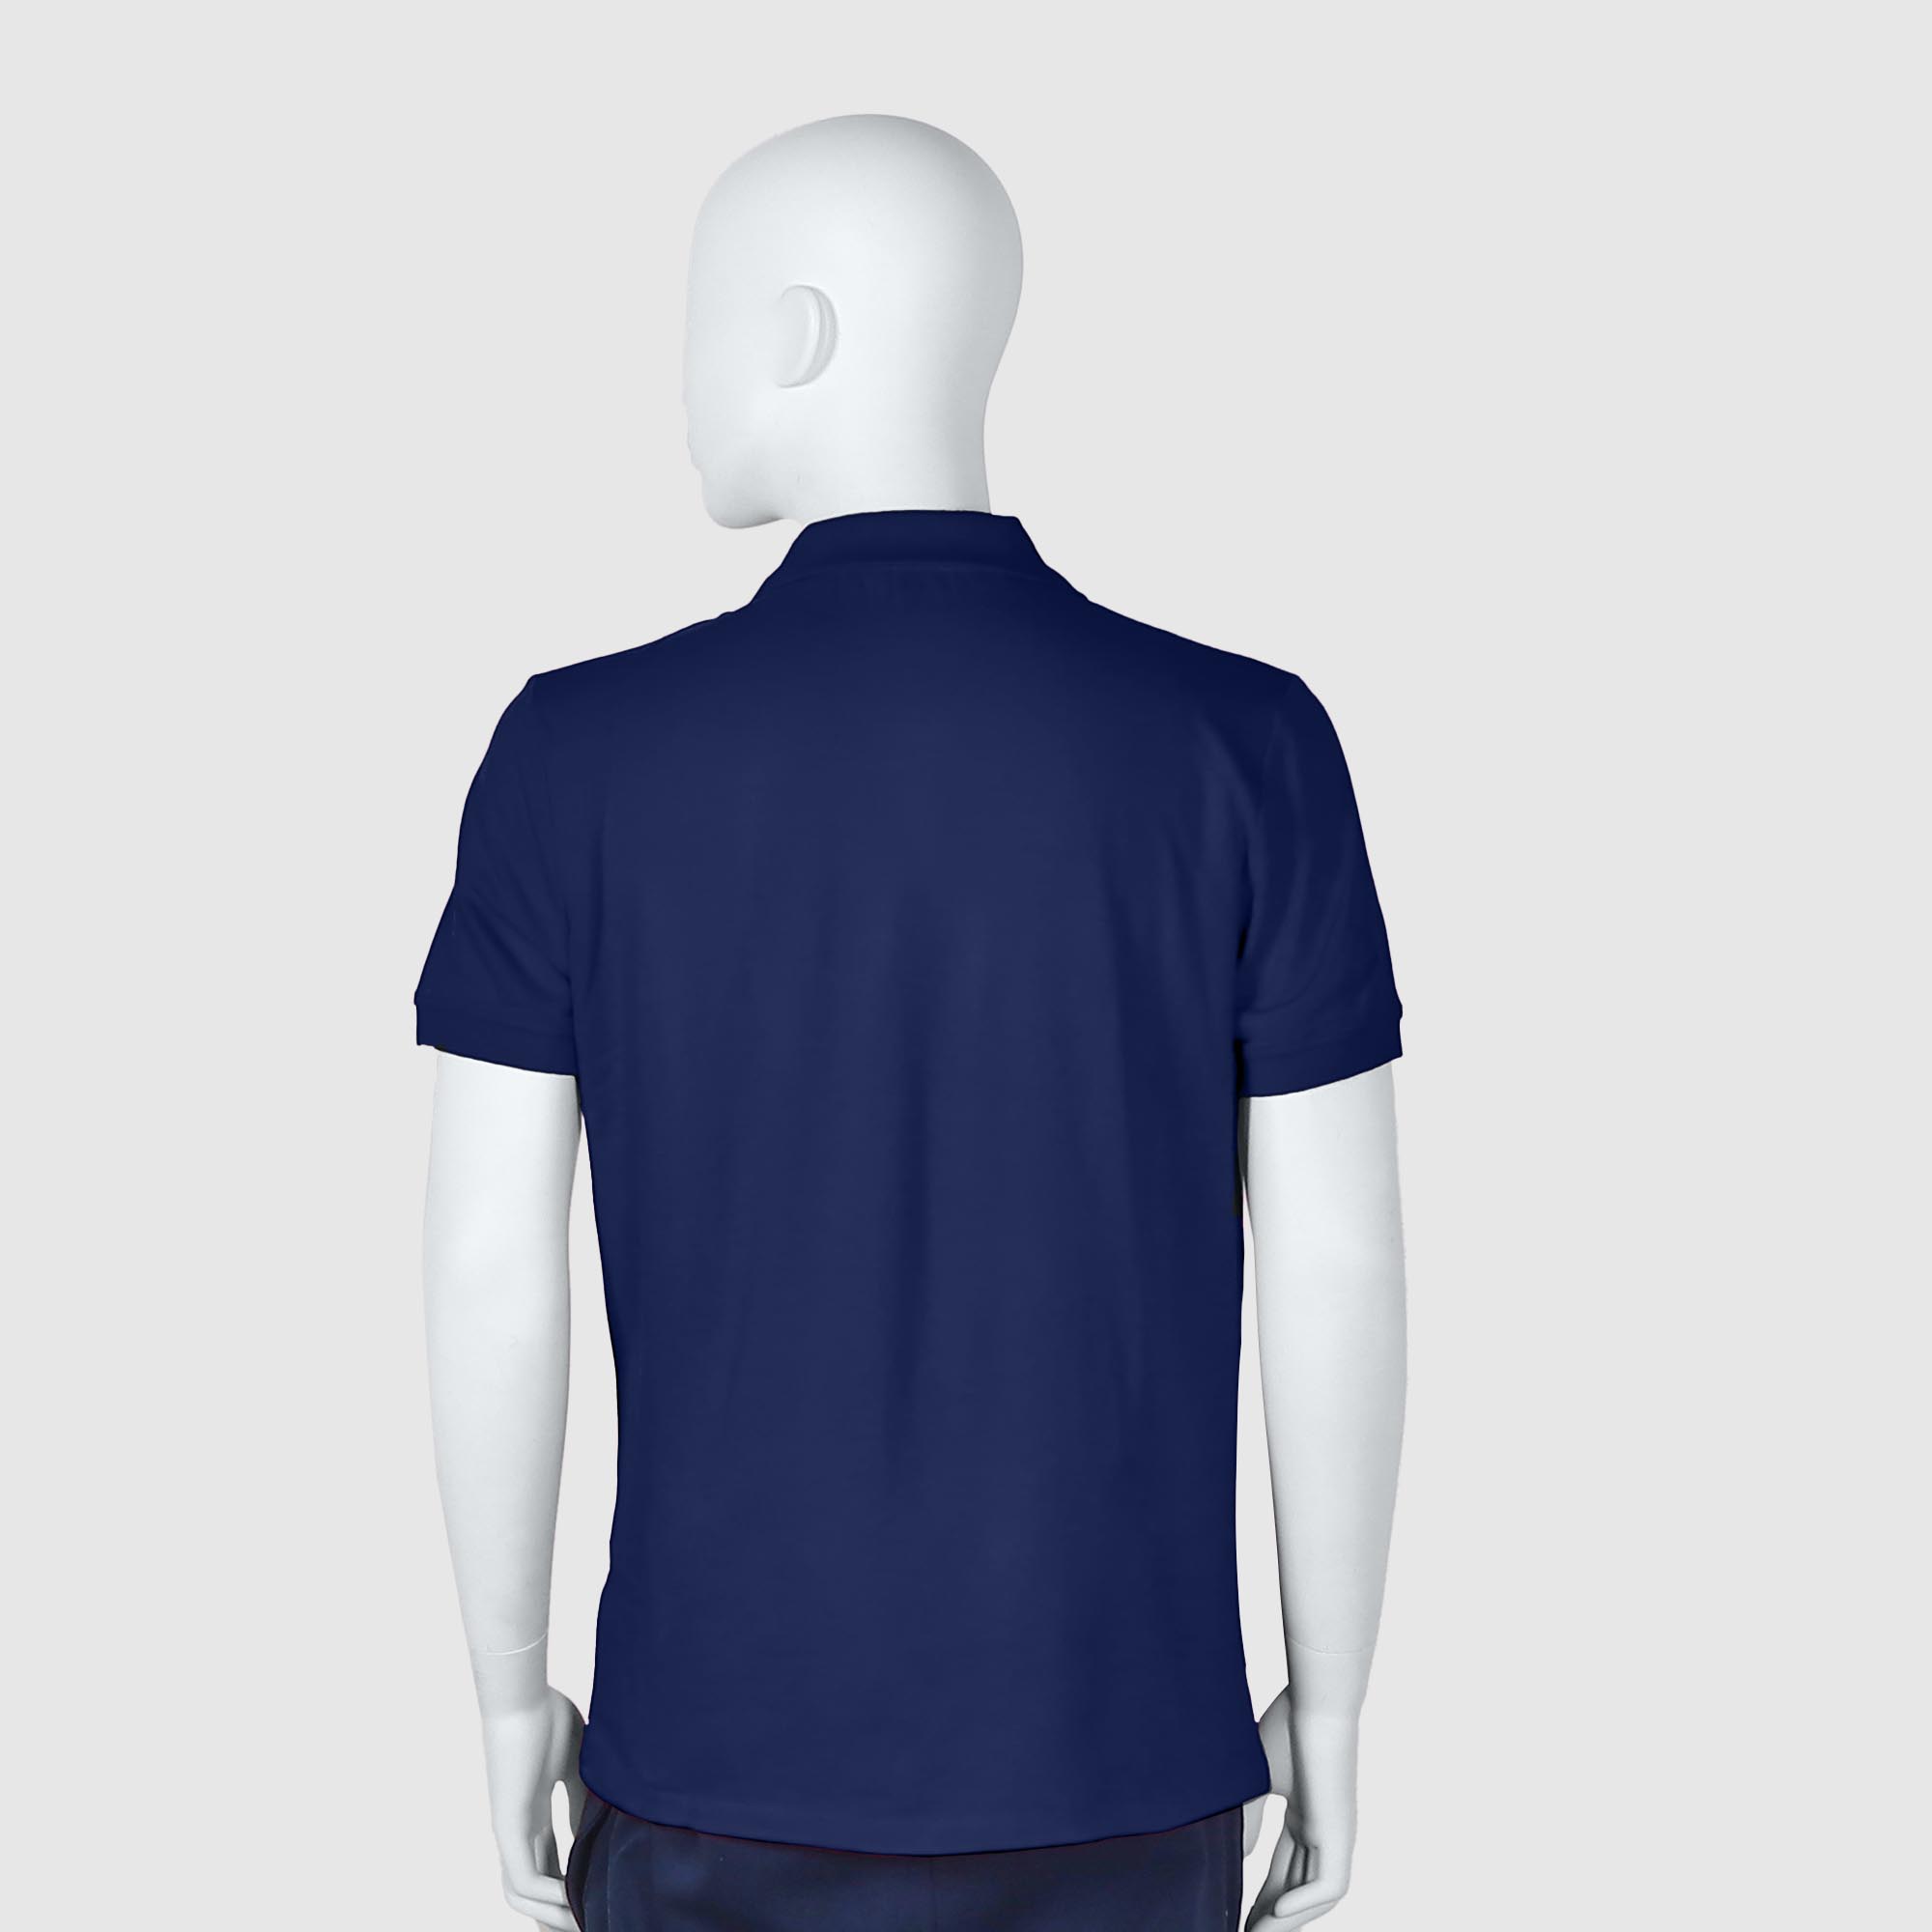 Мужская футболка-поло Diva Teks синяя (DTD-10), цвет синий, размер 52-54 - фото 2